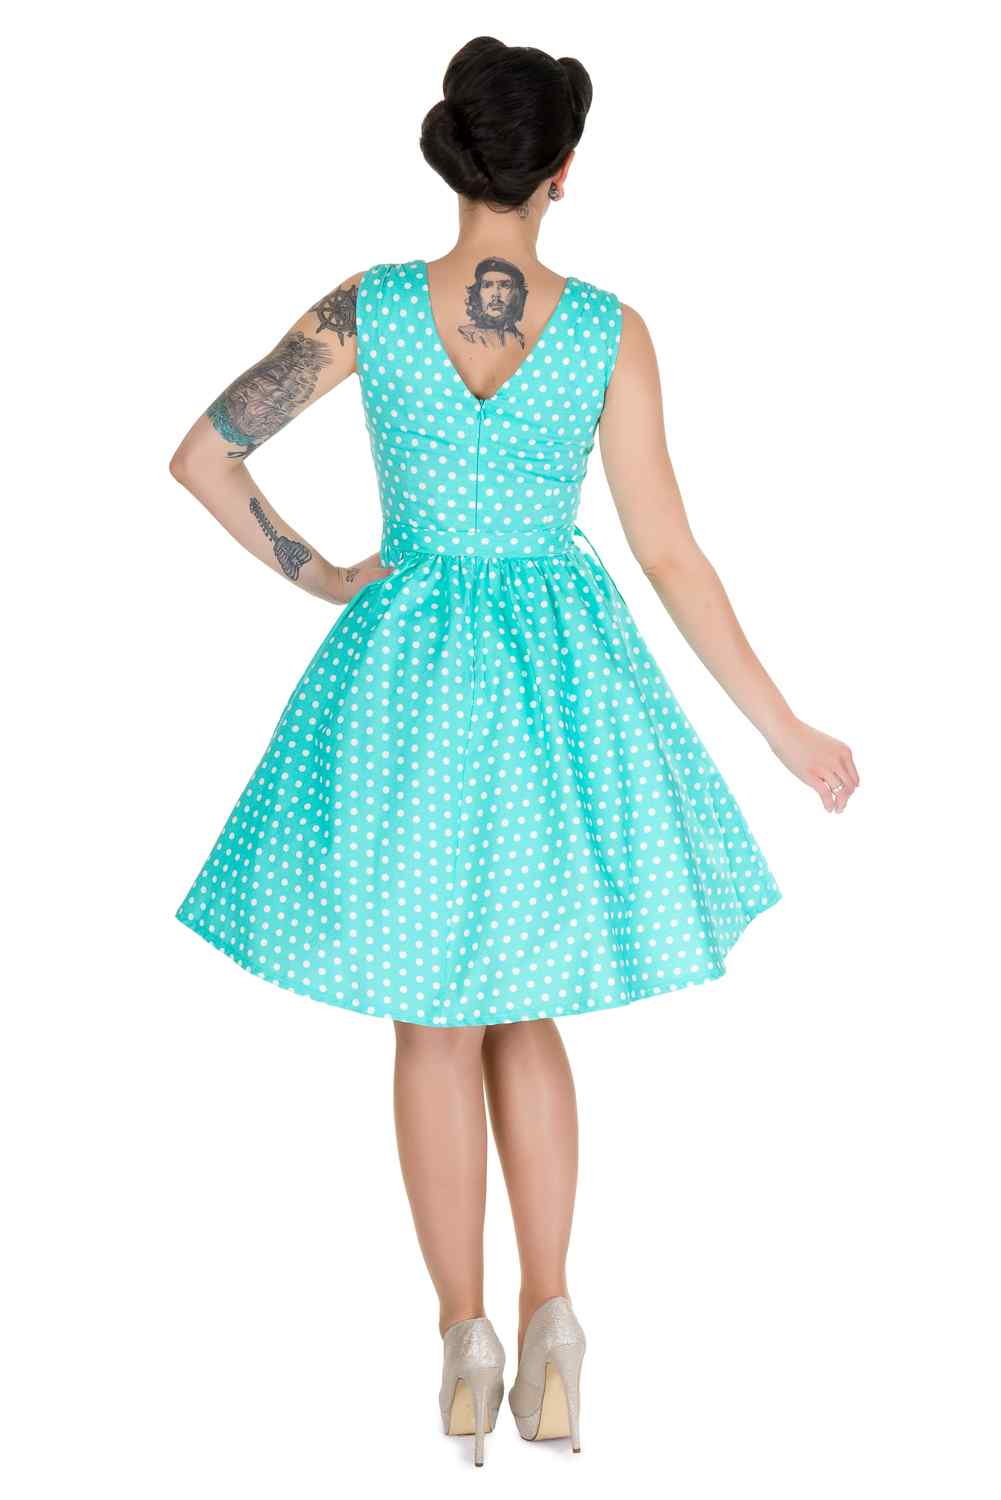 Back view of Polka Dot Swing Dress in Aqua Blue